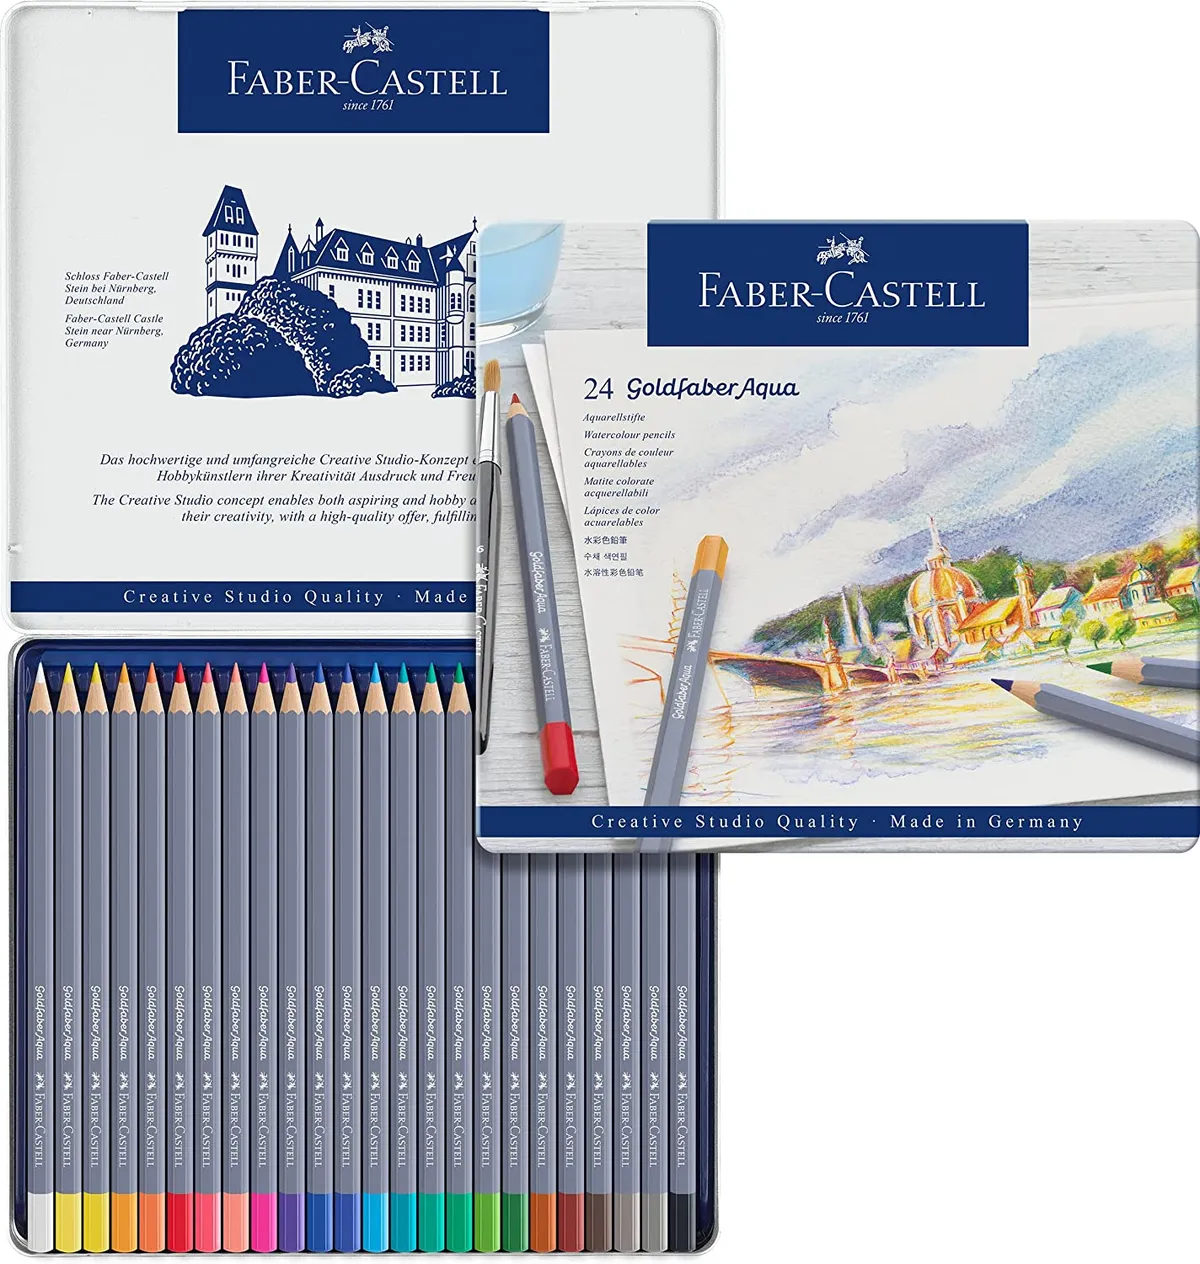 Faber Castell Goldfaber Aqua watercolour pencils